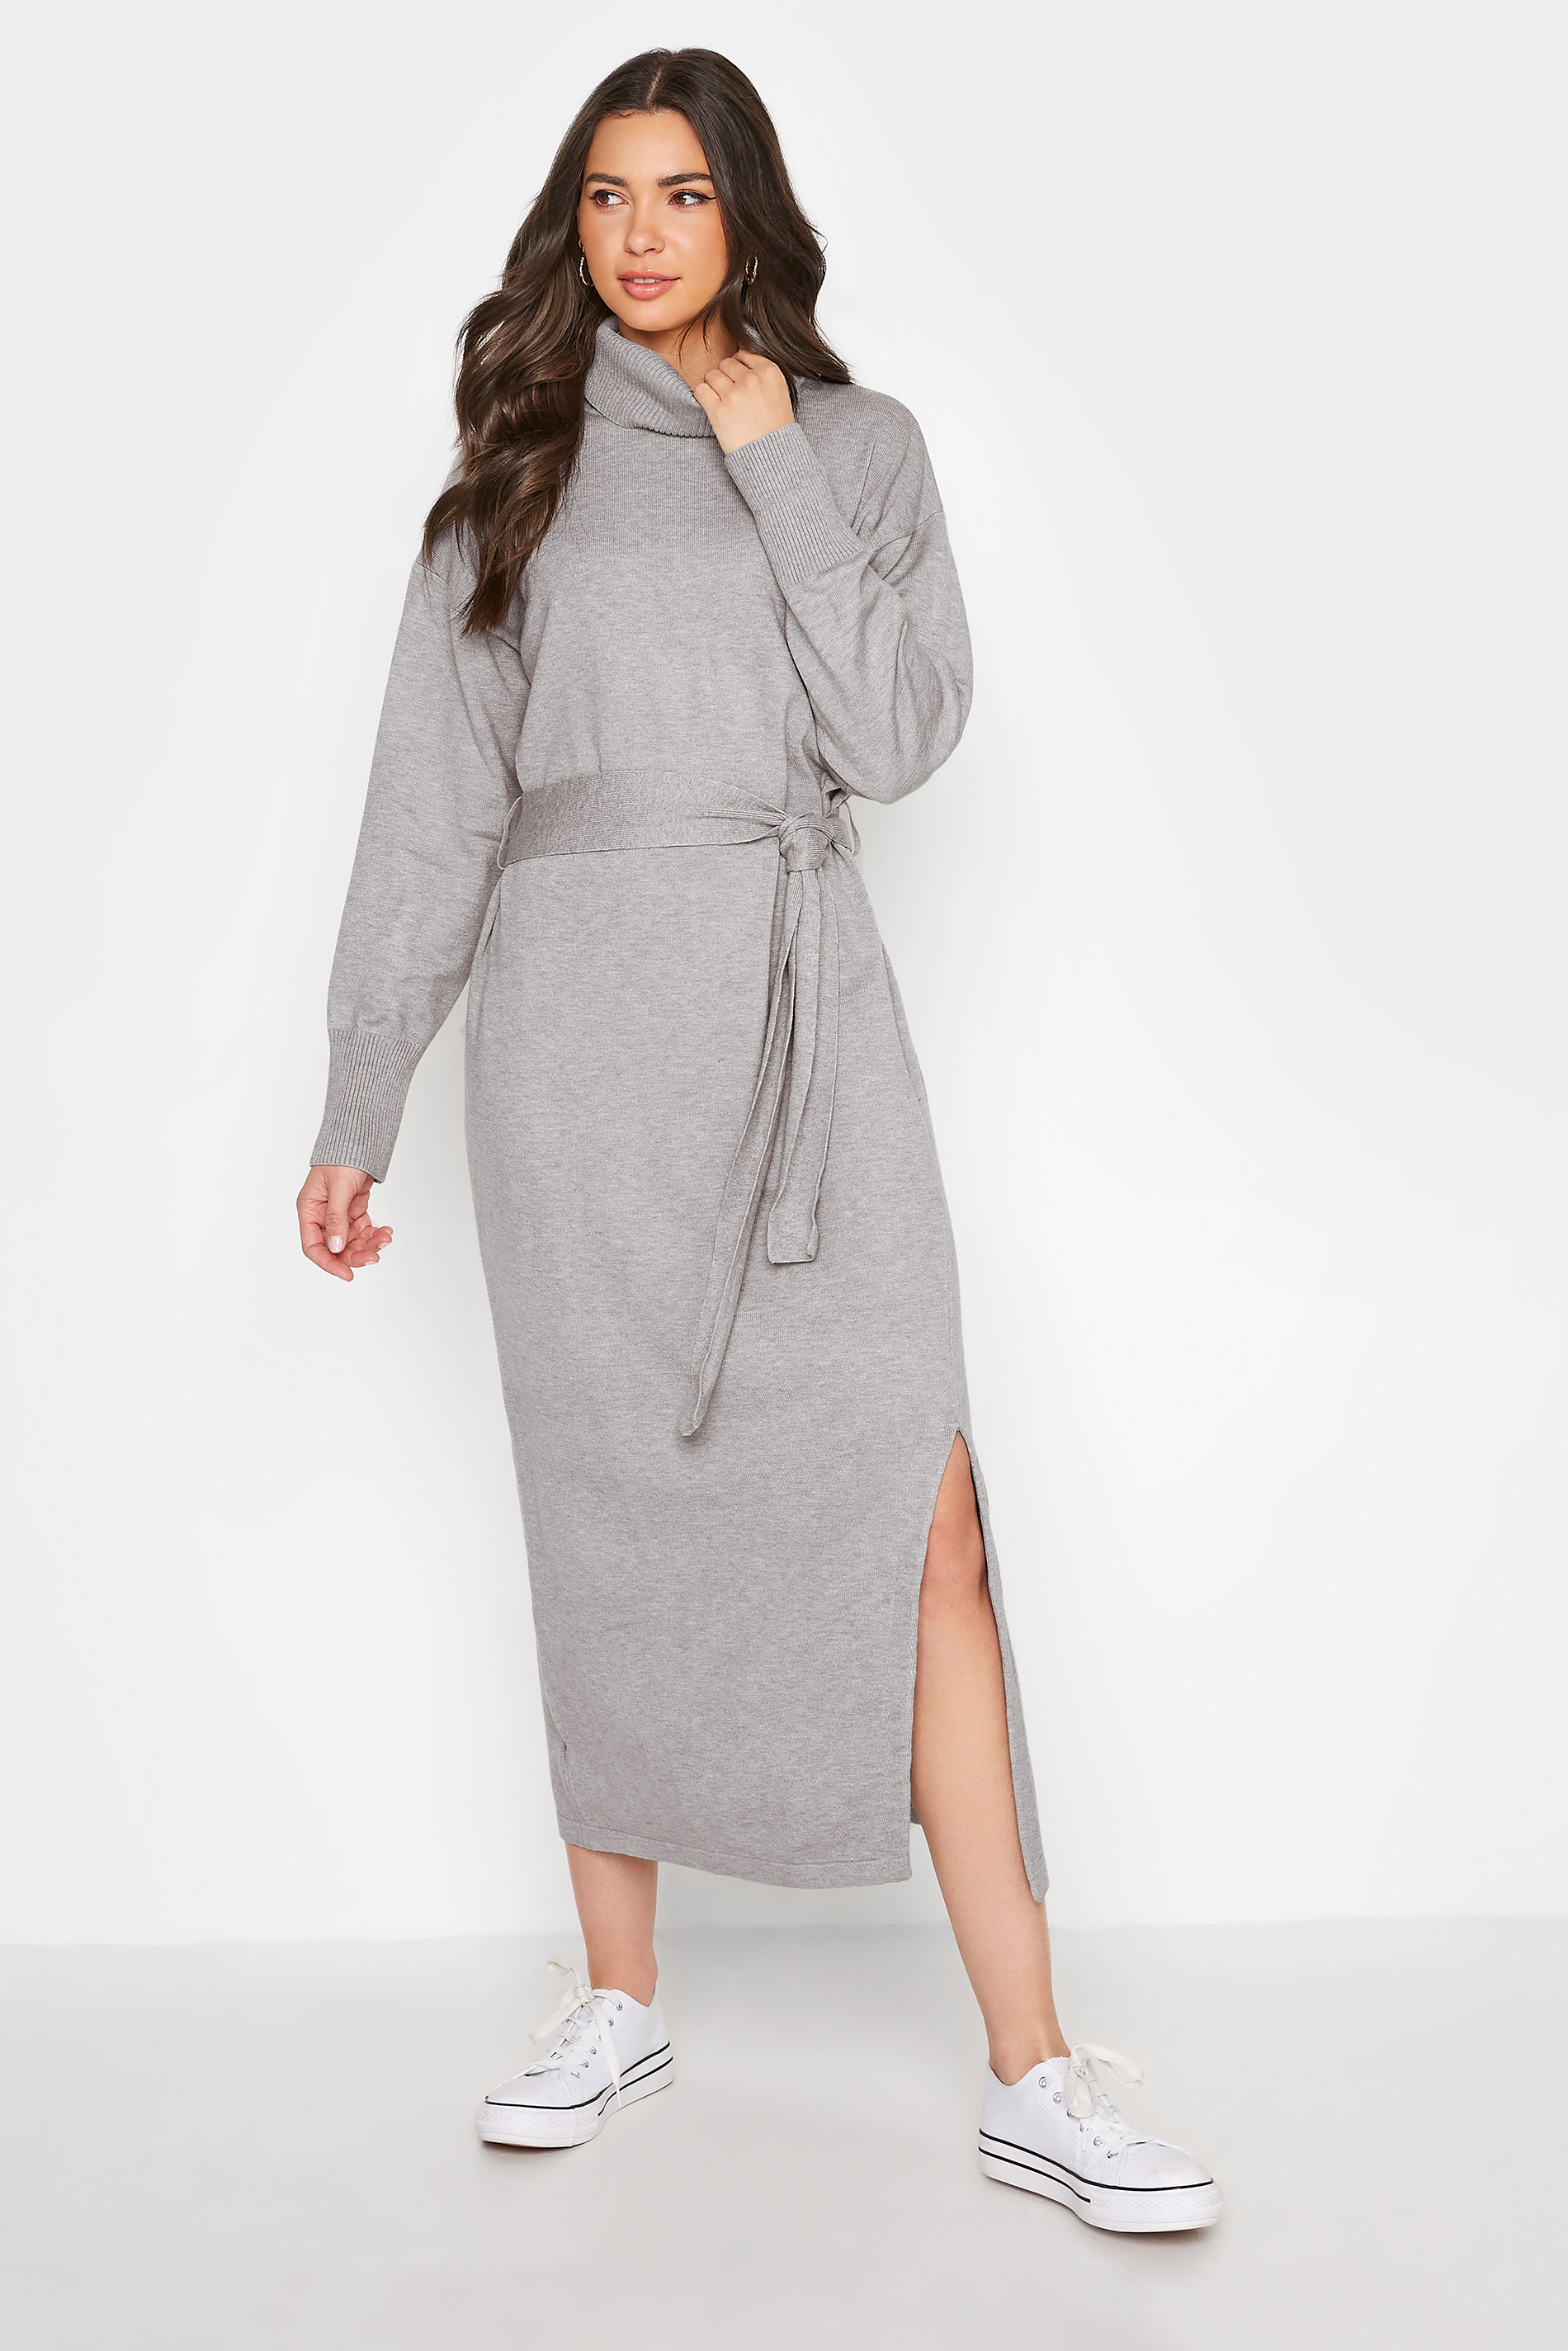 Tall LTS Grey Roll Neck Knitted Midi Dress | Long Tall Sally 1